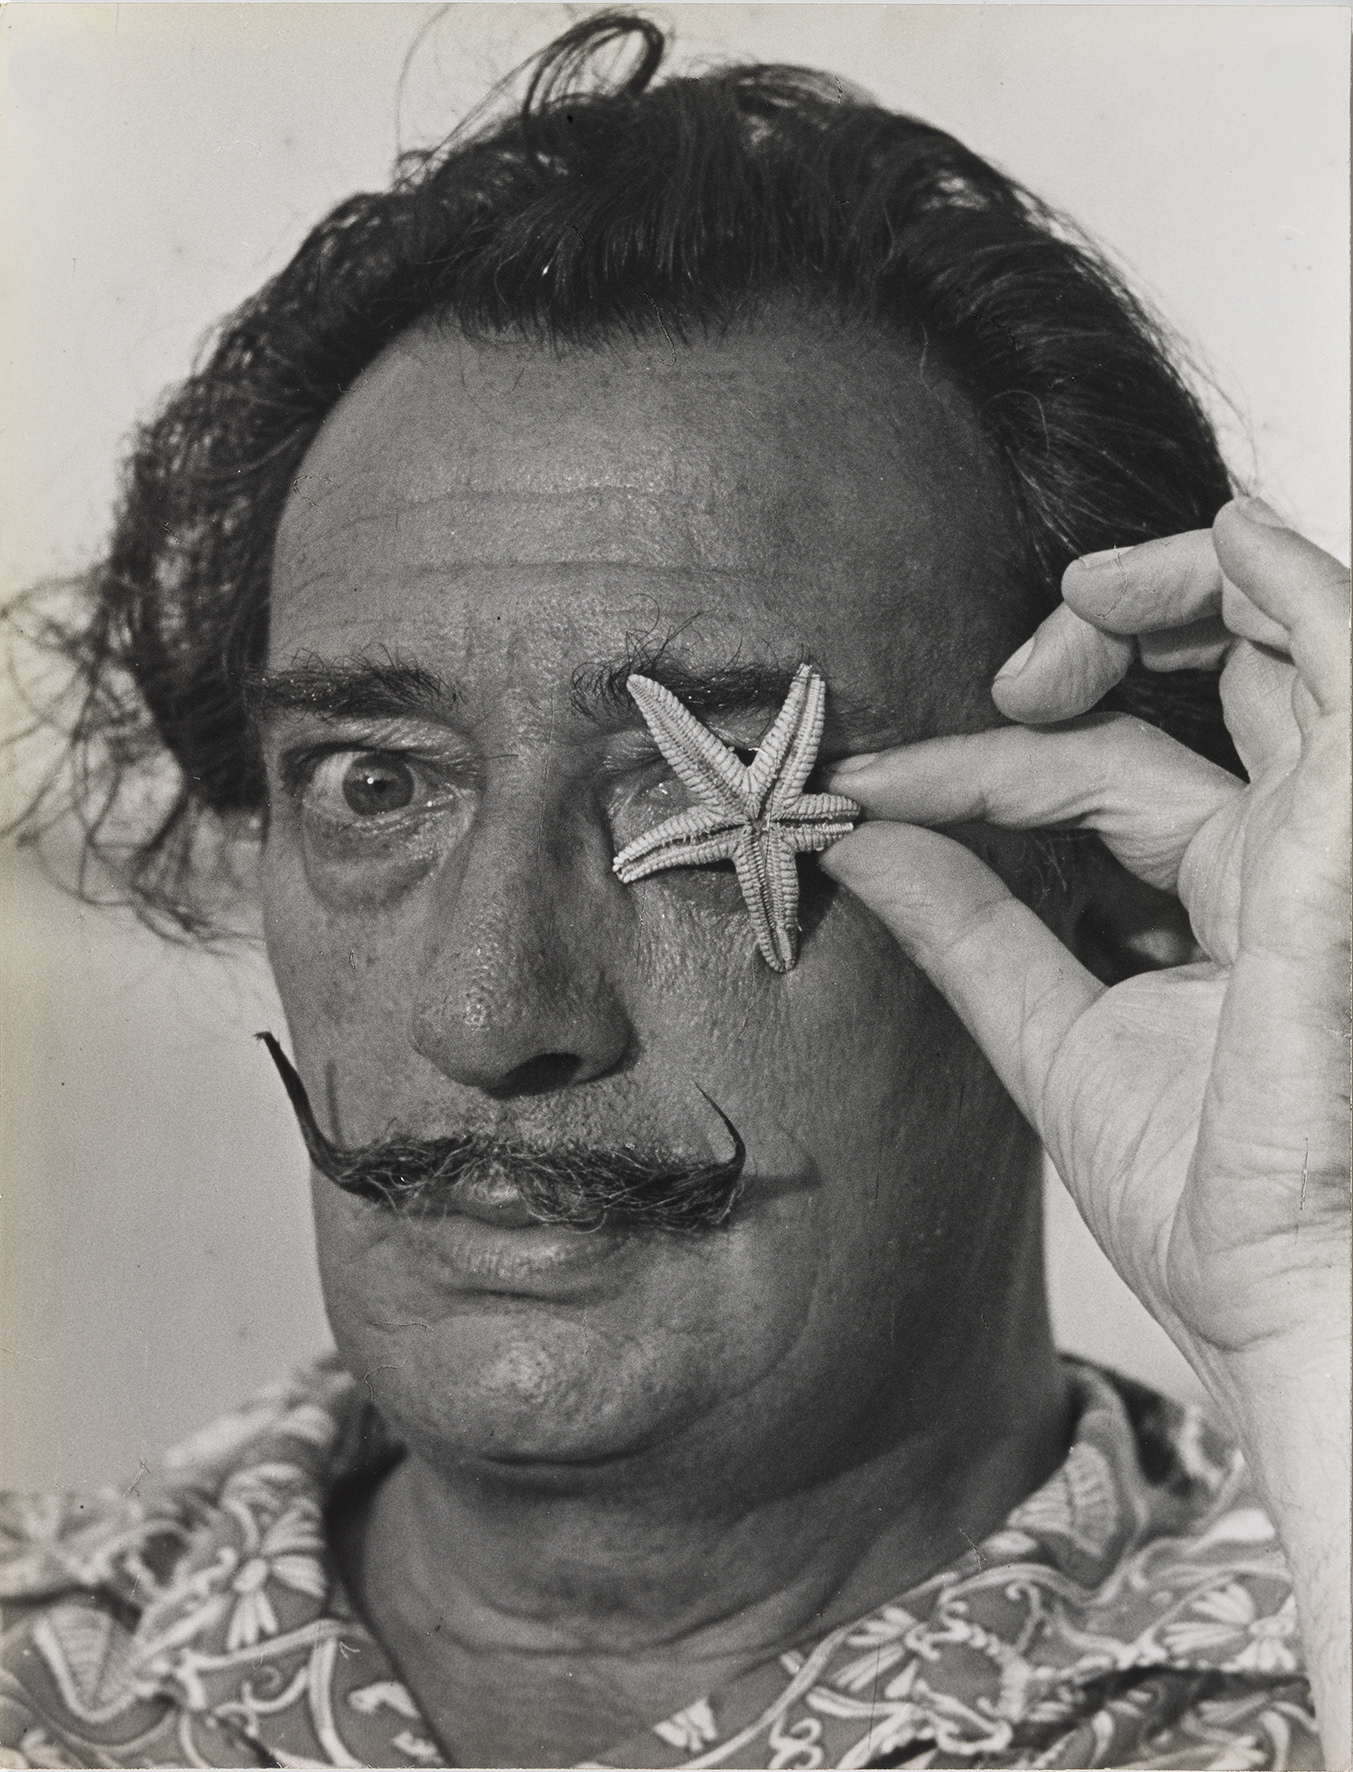 © X. Miserachs/Fundació Gala-Salvador Dalí, Figueres, 2016. Image Rights of Salvador Dalí reserved. Fundació Gala-Salvador Dalí, Figueres, 2016.